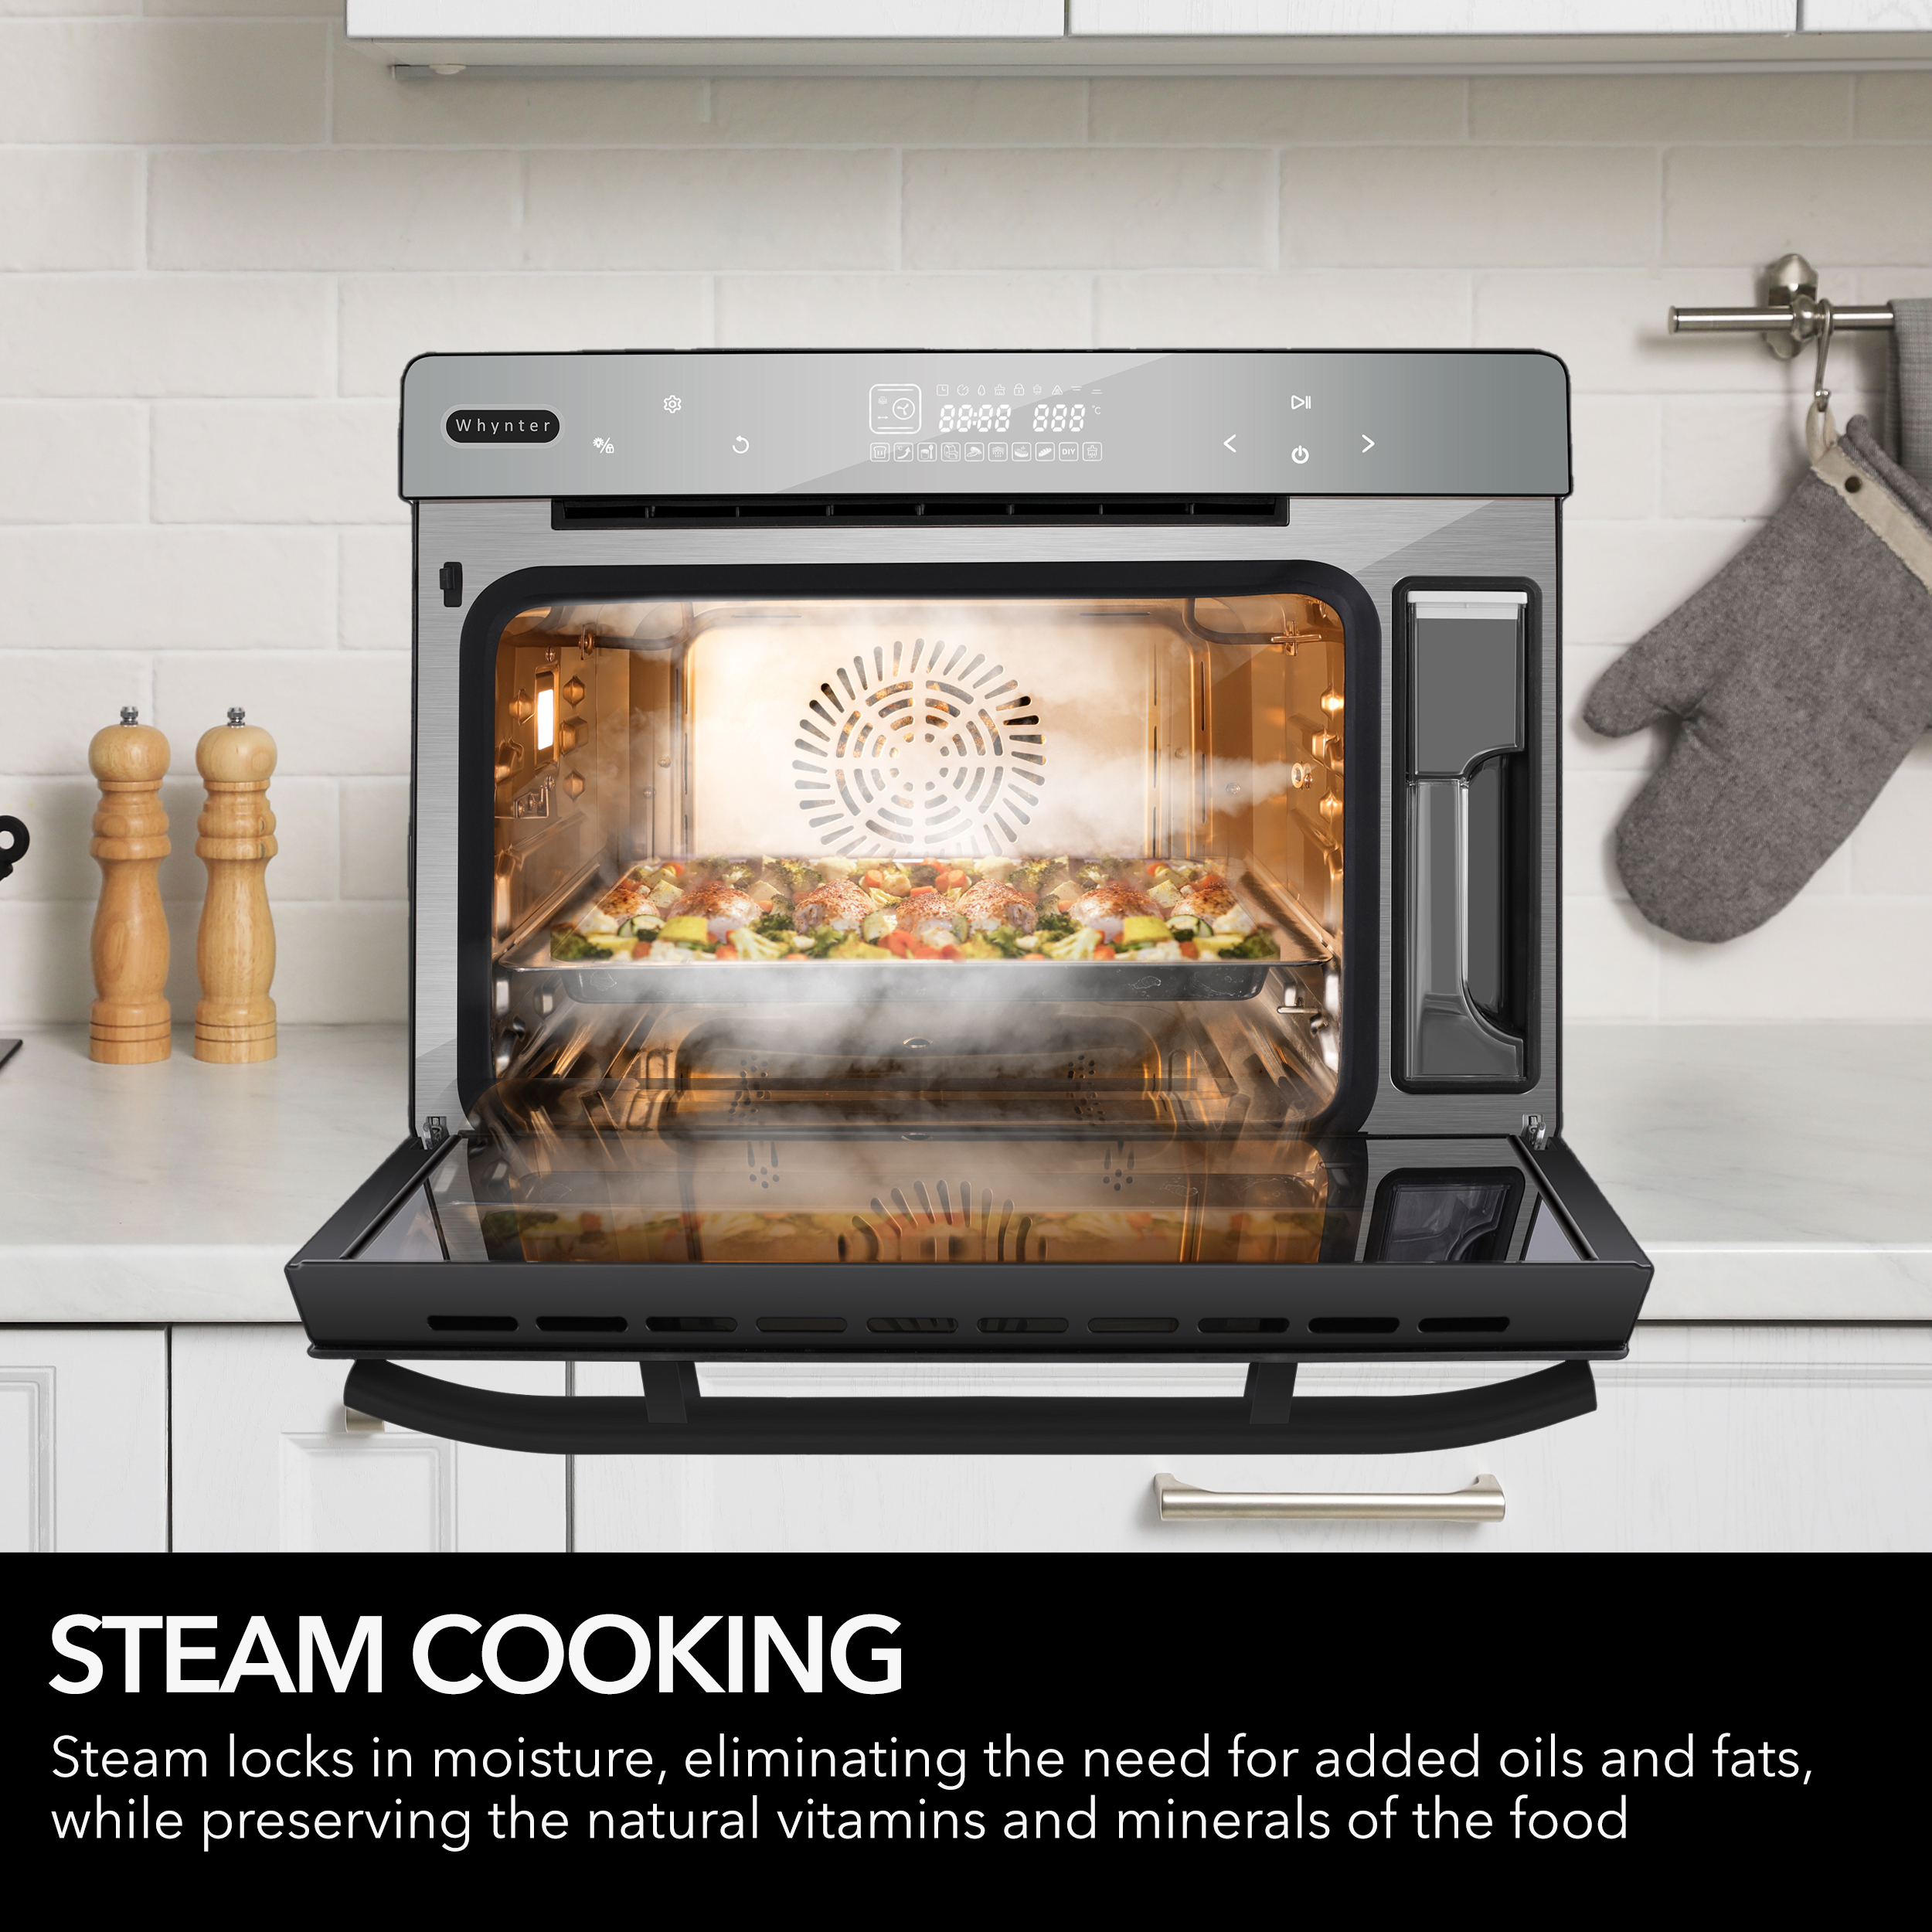 Countertop Steam Ovens: An Overview - Steam & Bake